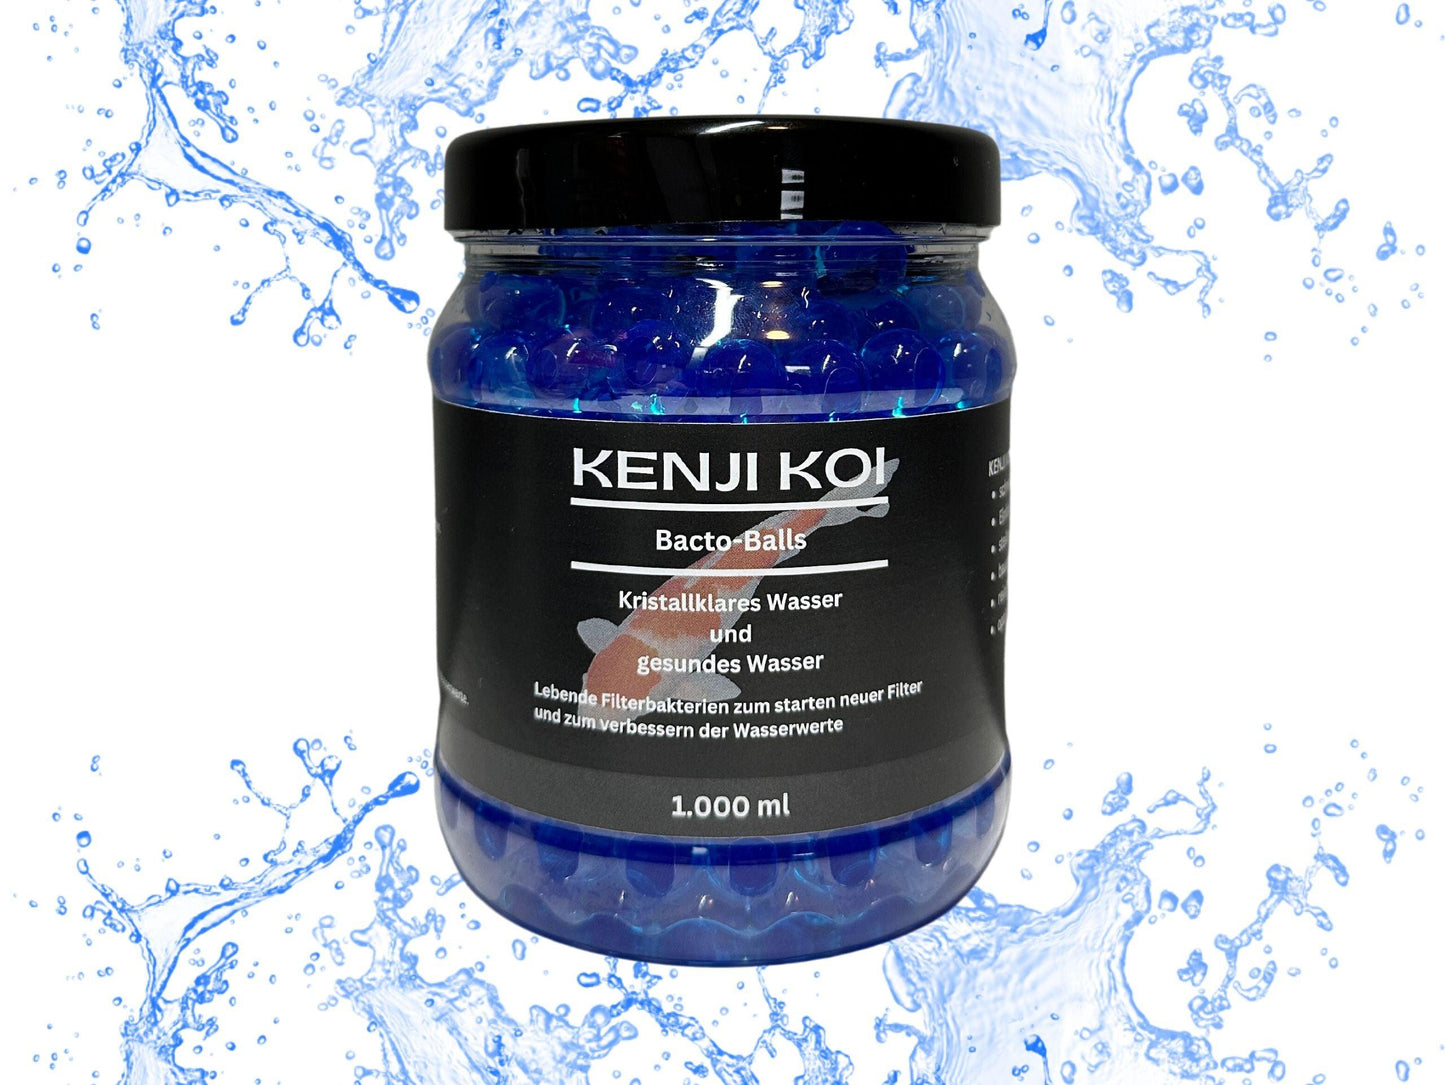 KENJI KOI Bacto-Balls 1000ml - KENJI KOI Products